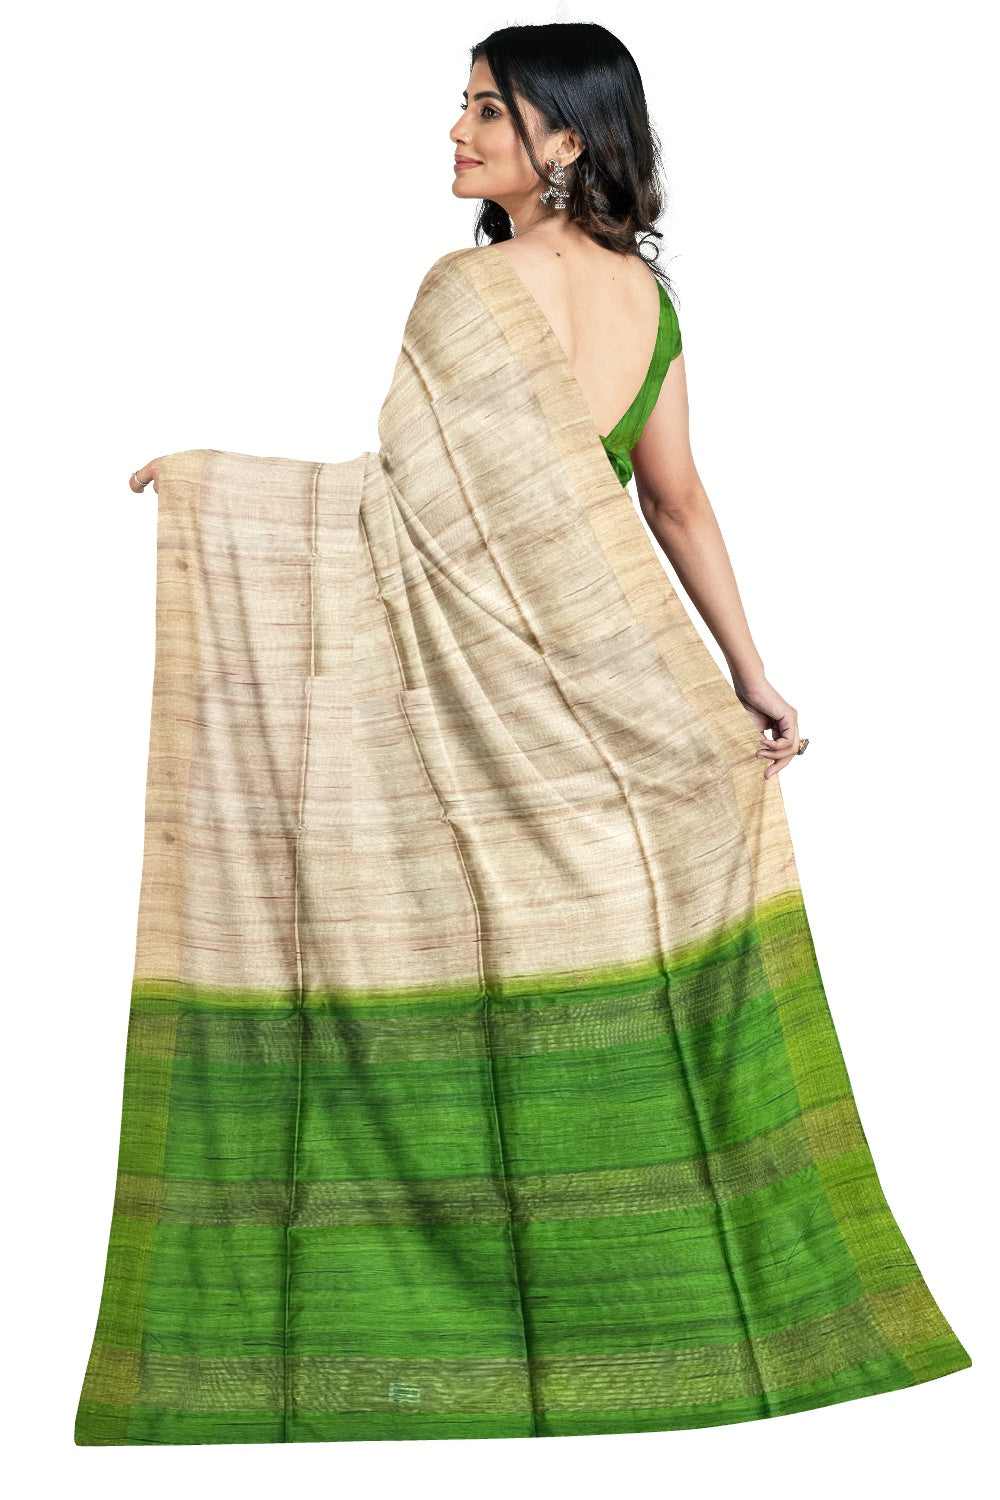 Southloom Beige Semi Tussar Designer Saree with Green Pallu